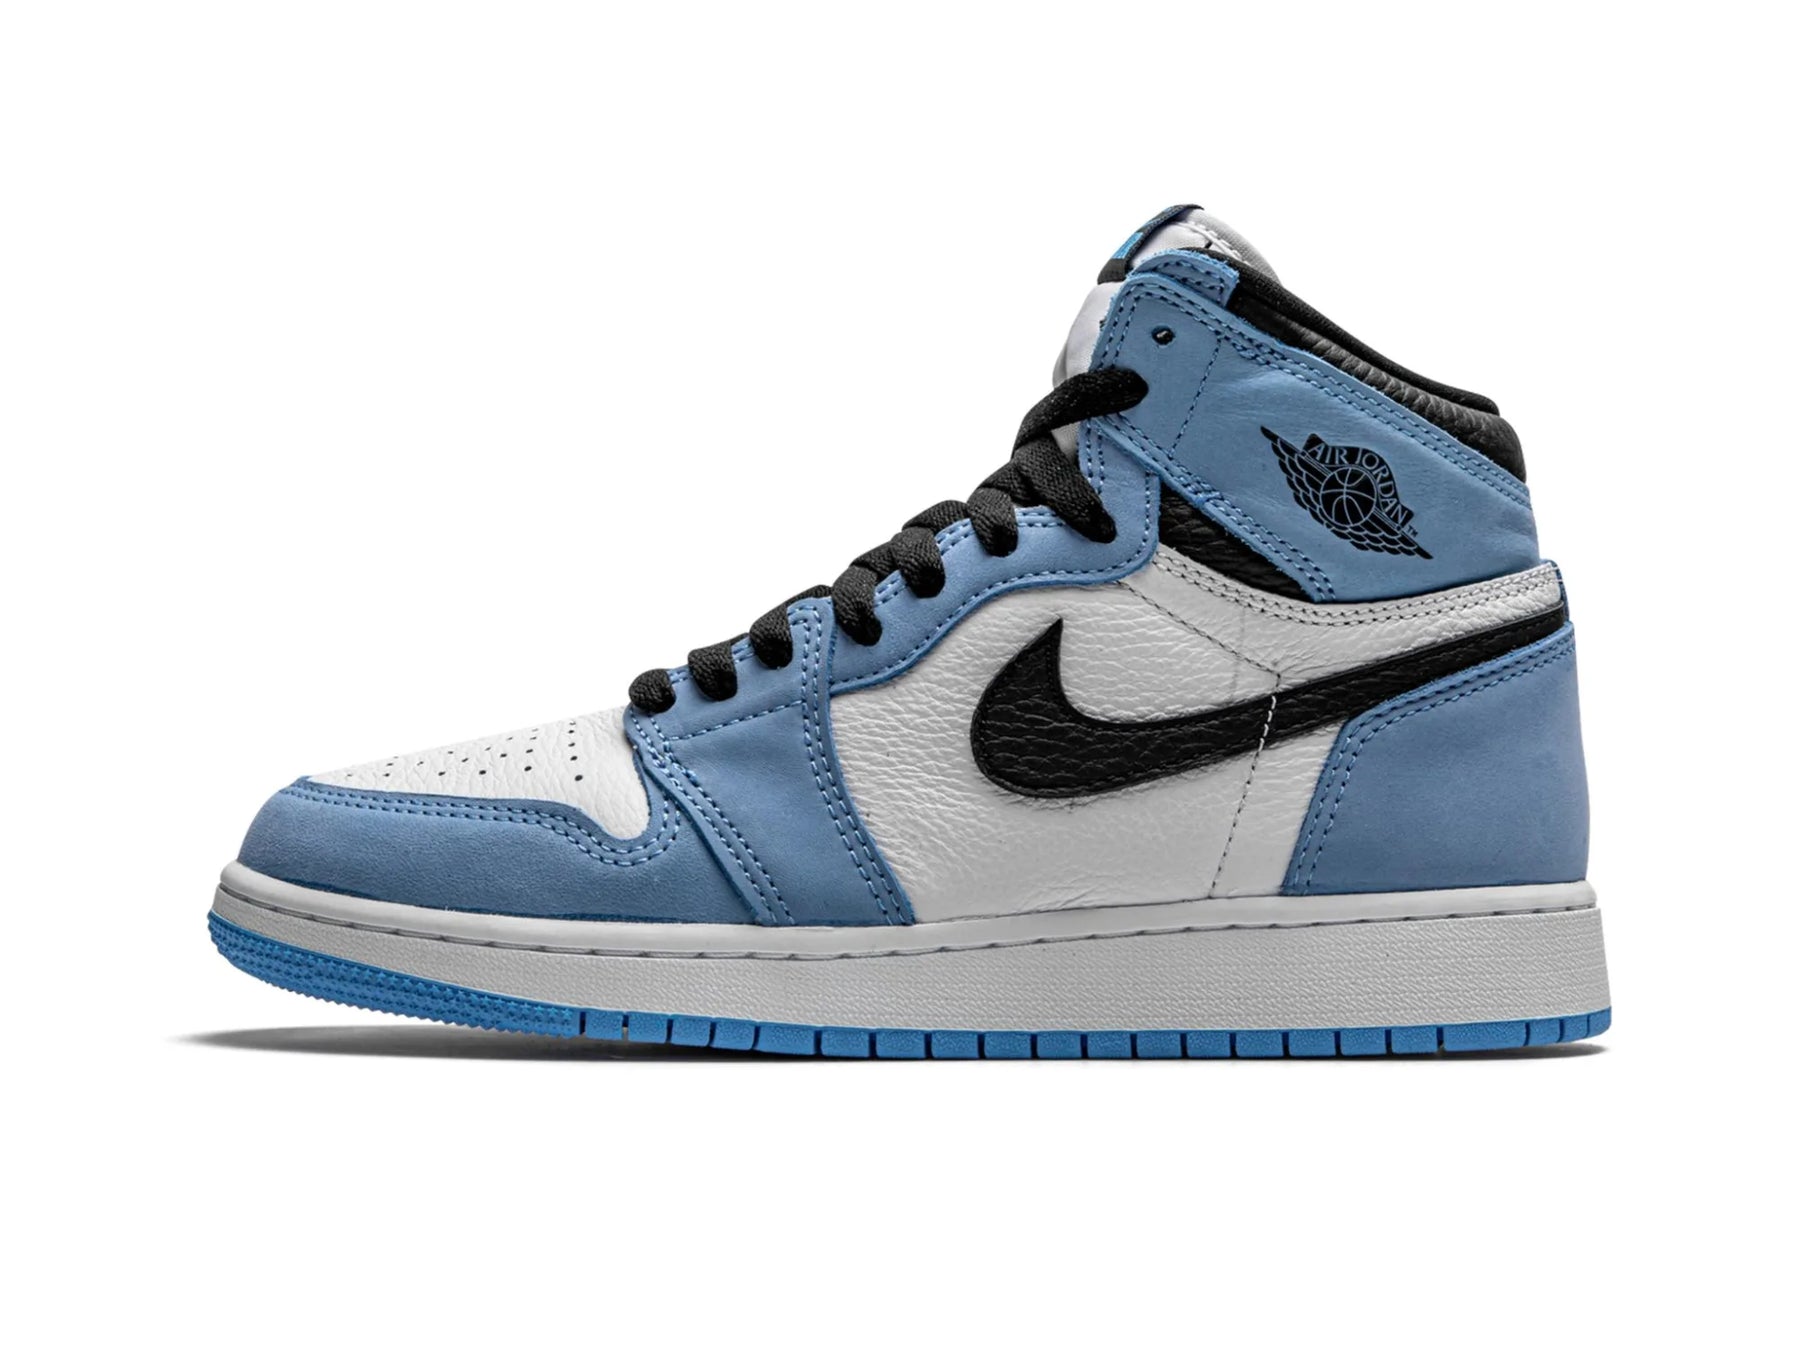 Nike Air Jordan 1 High "University Blue" - street-bill.dk